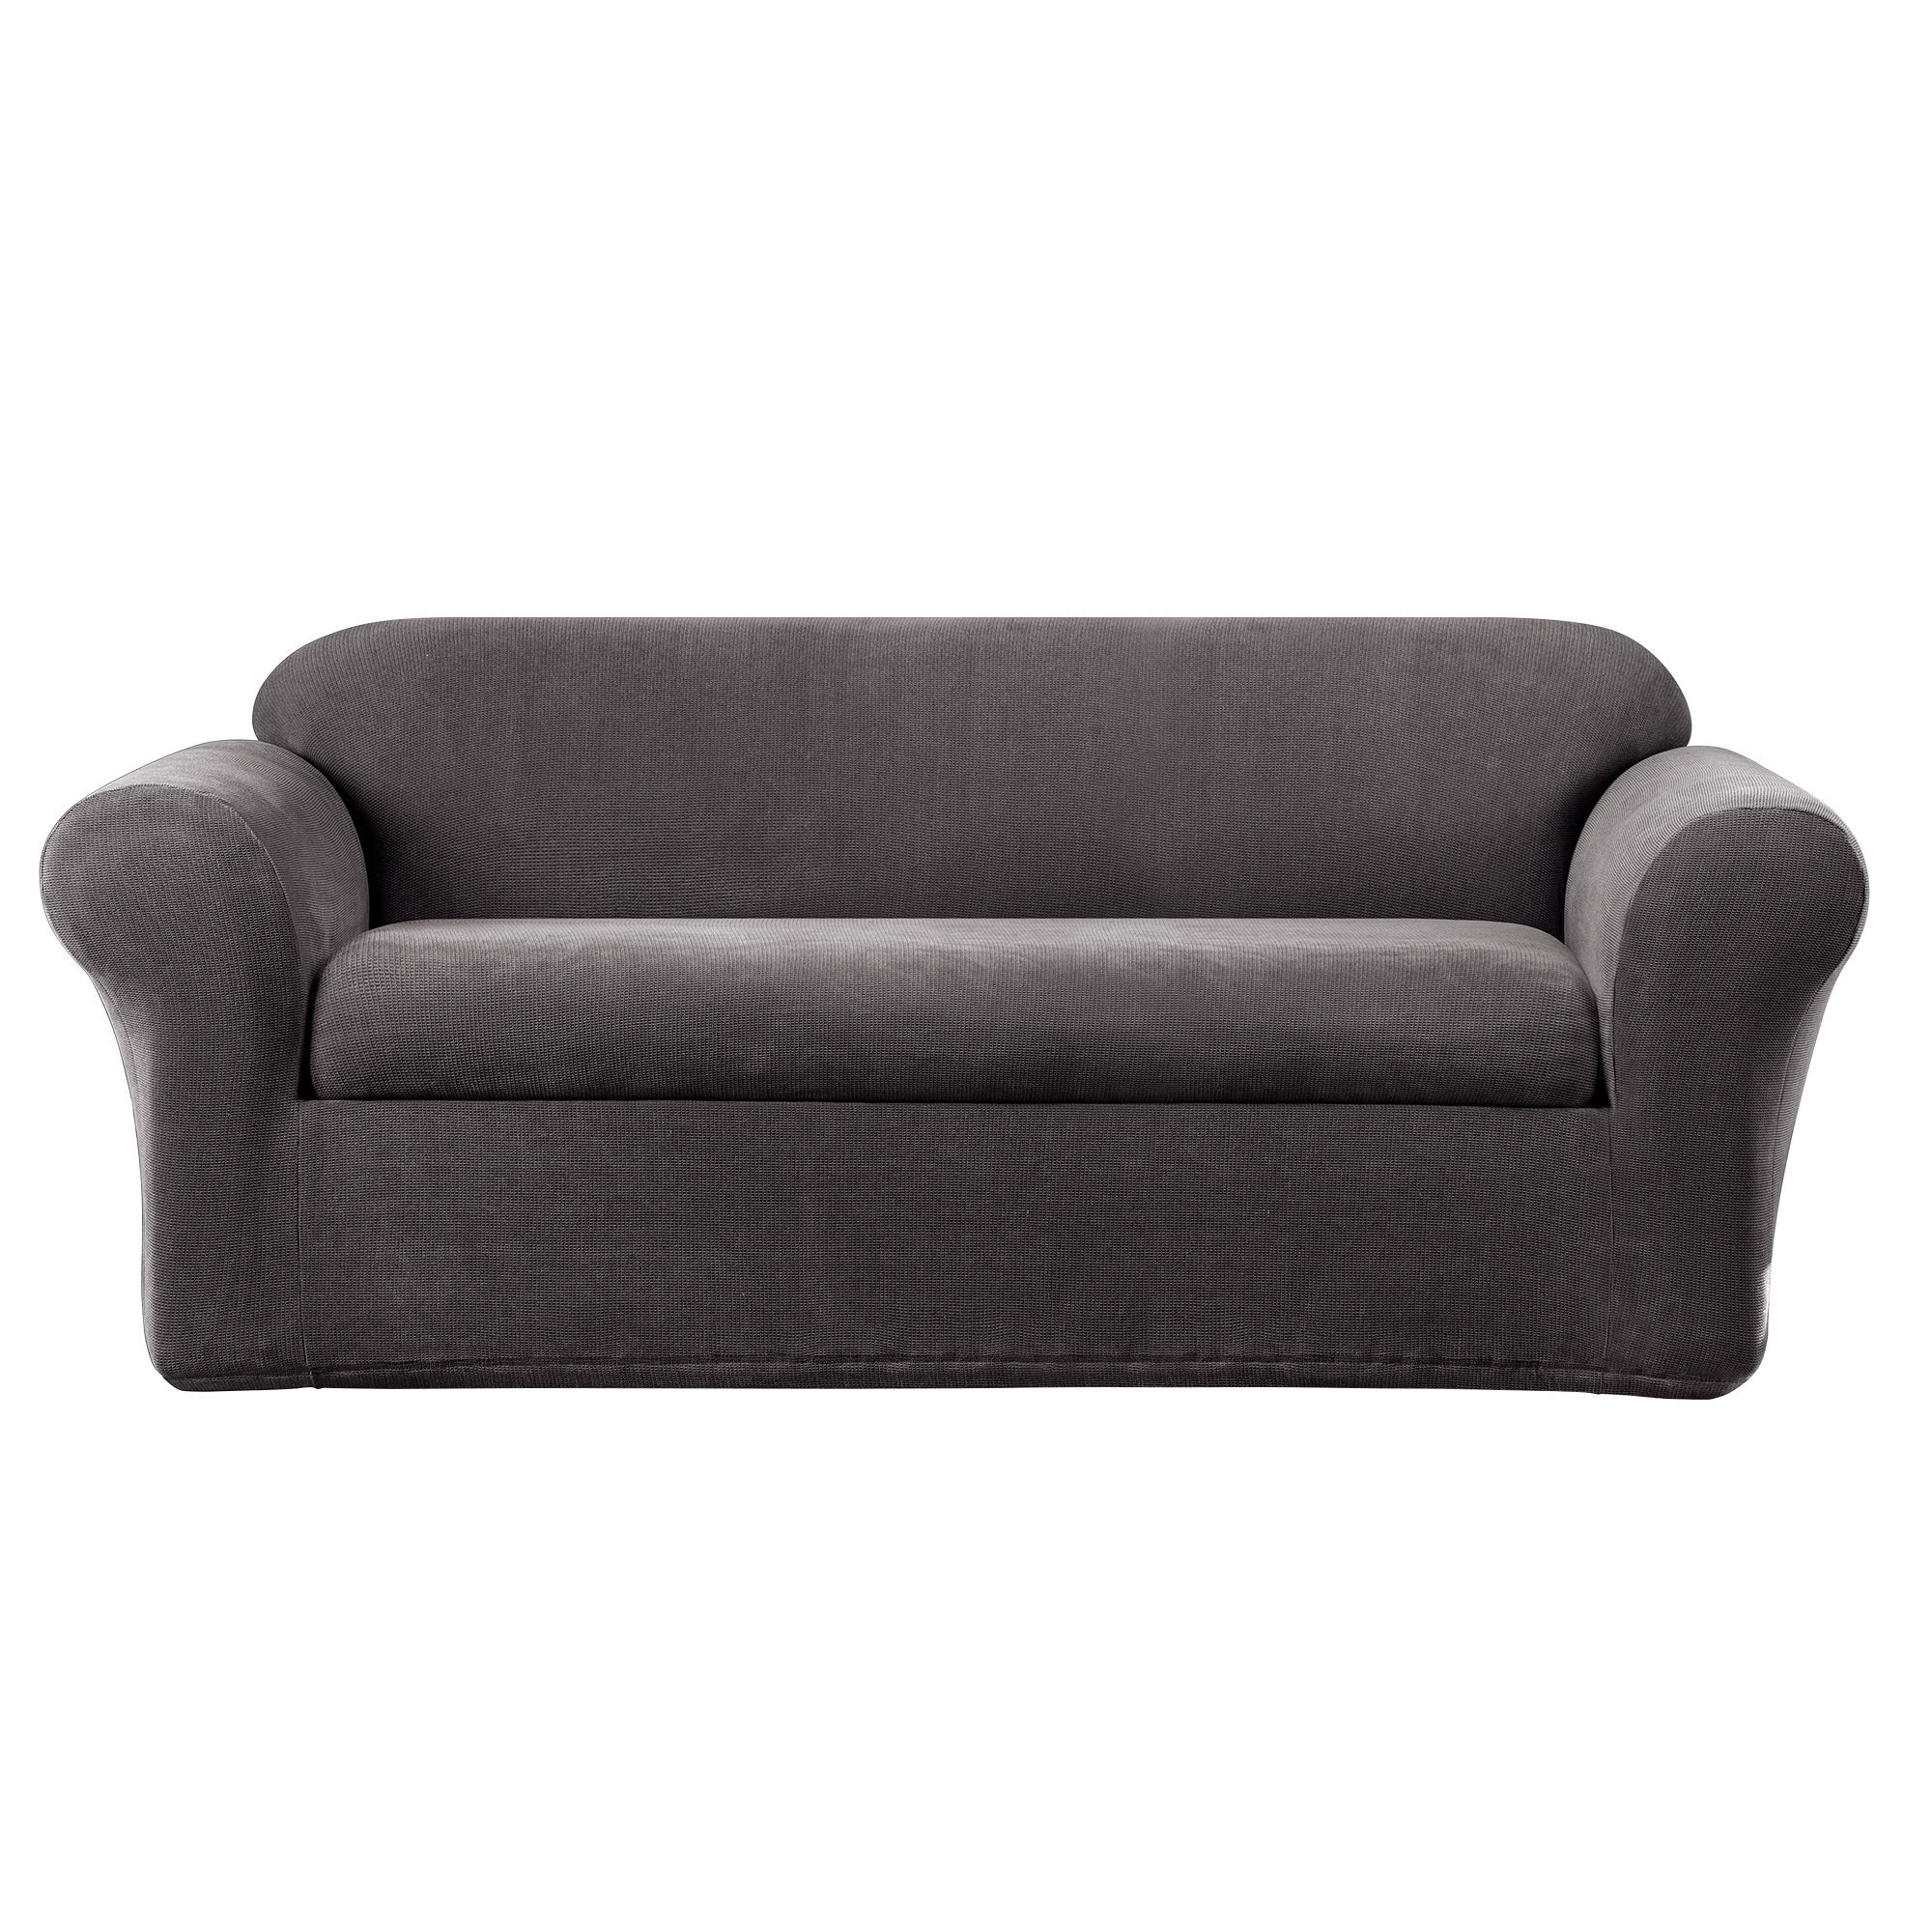 SureFit Home Decor Stretch Metro Pet Chair Furniture Cover, Sofa, Gray Color